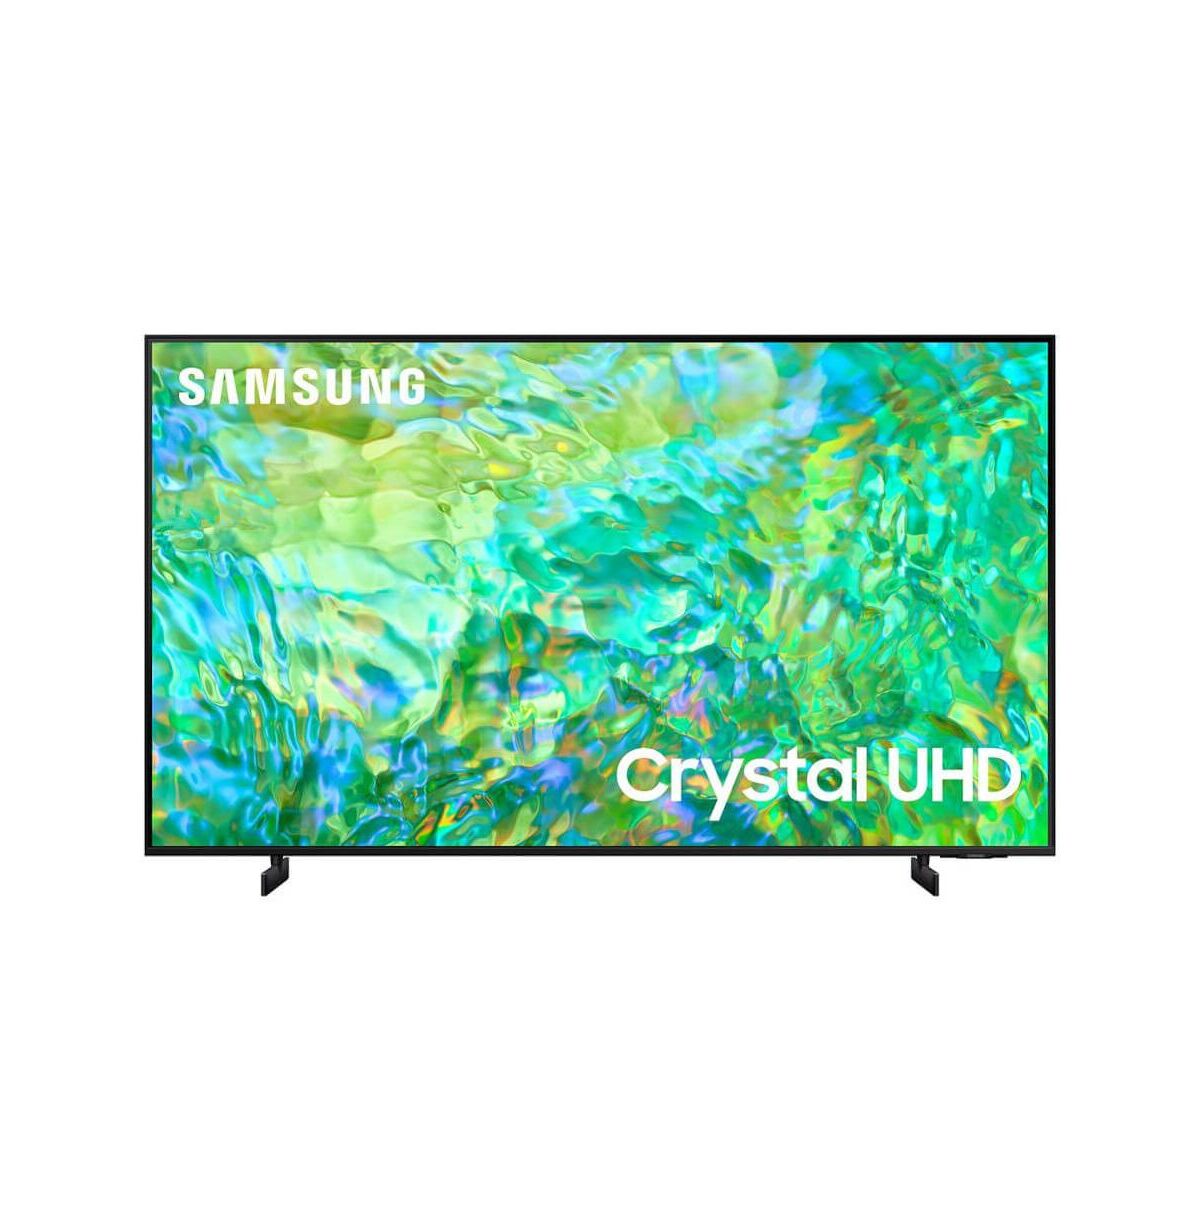 Samsung 85 inch Class Crystal Uhd Smart Tv - Black